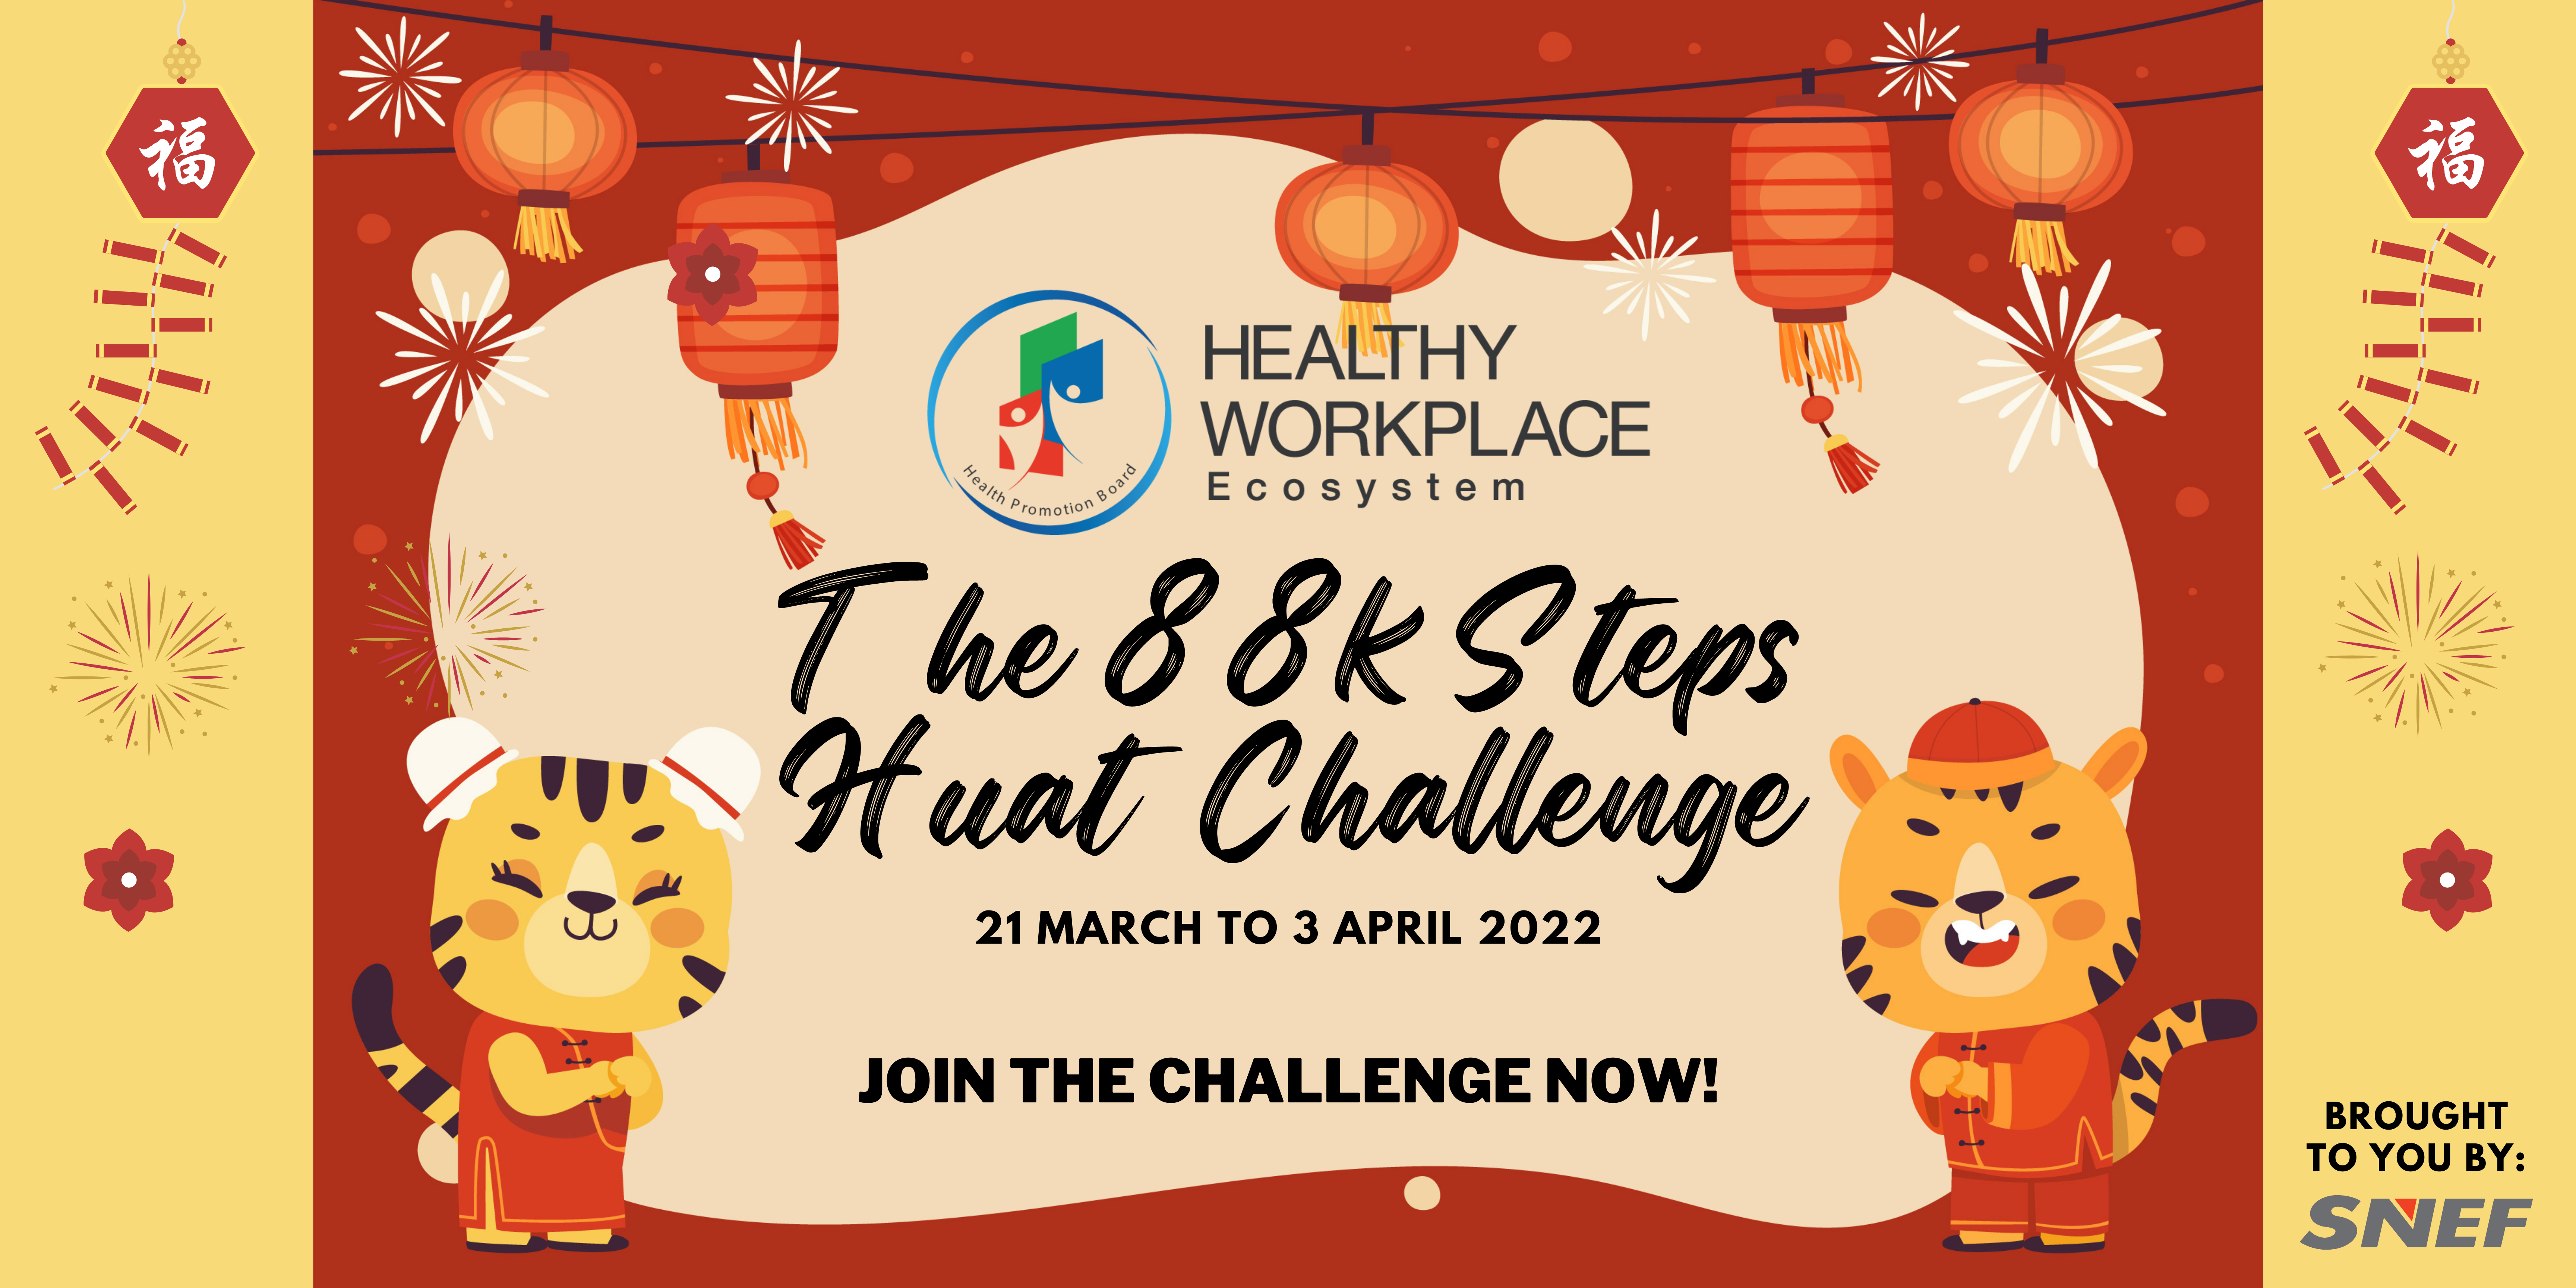 The 88k Steps Huat Challenge